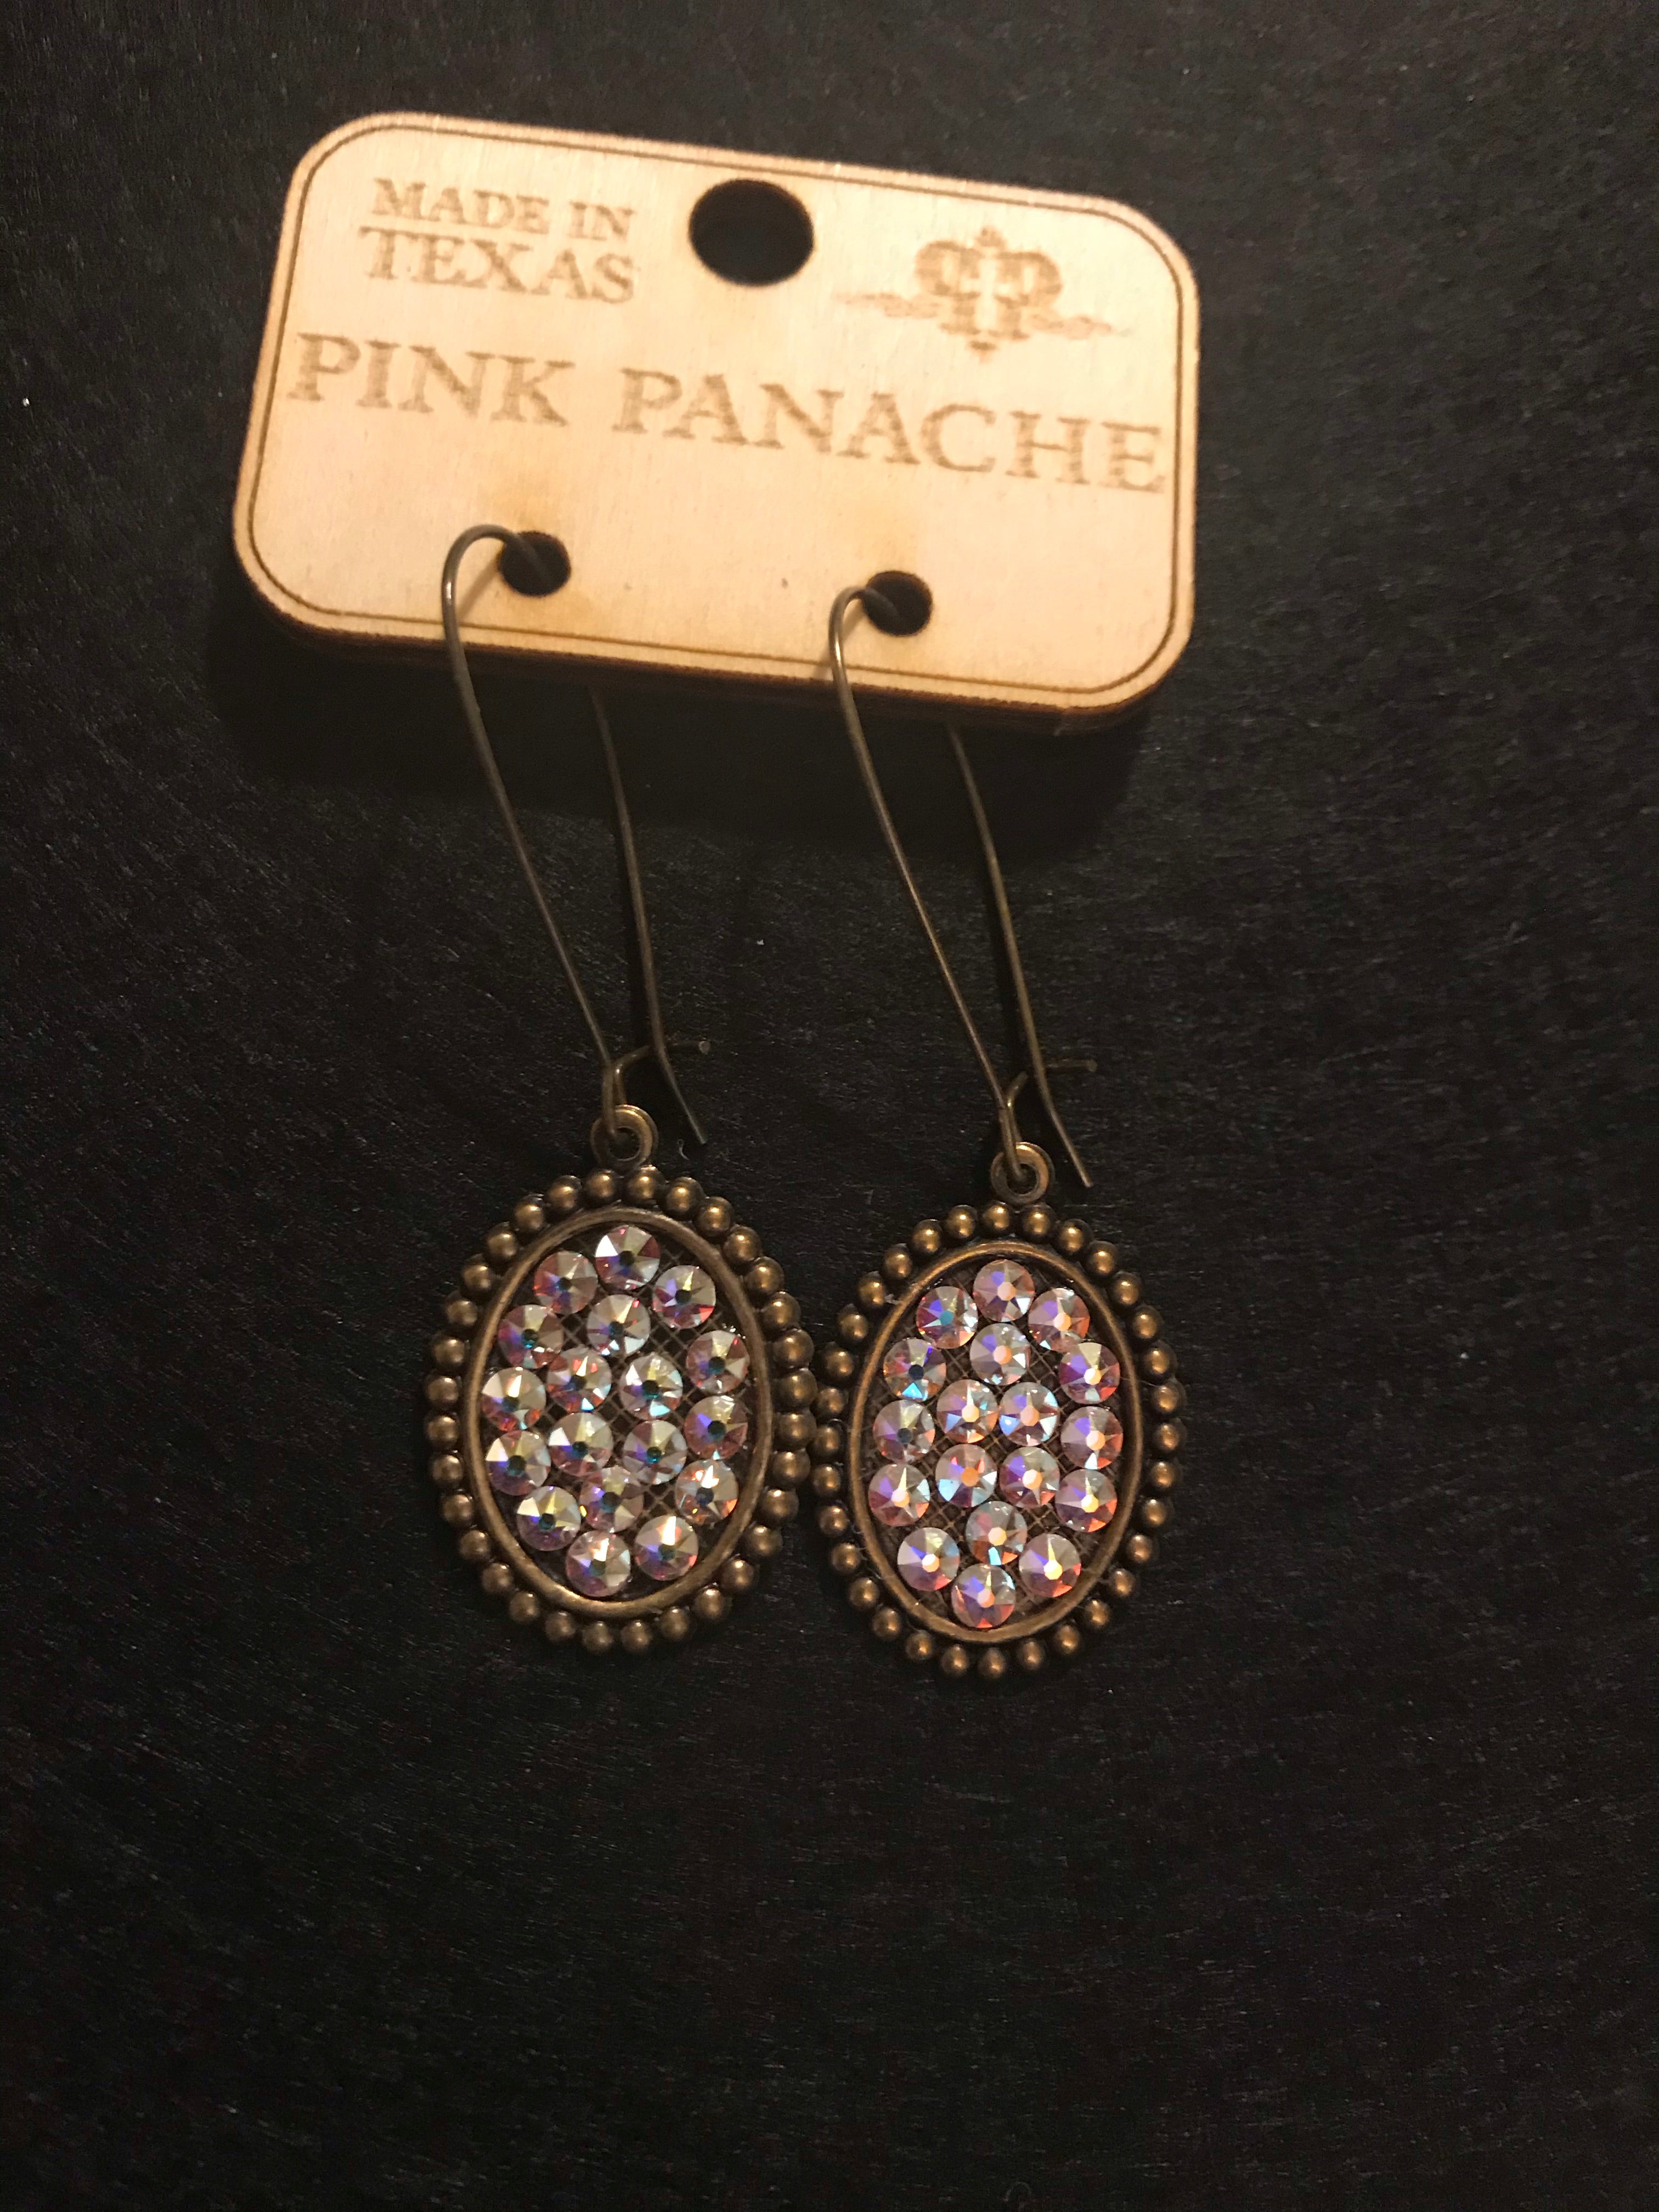 Mini Oval Bronze Crystal Pink Panache Earrings